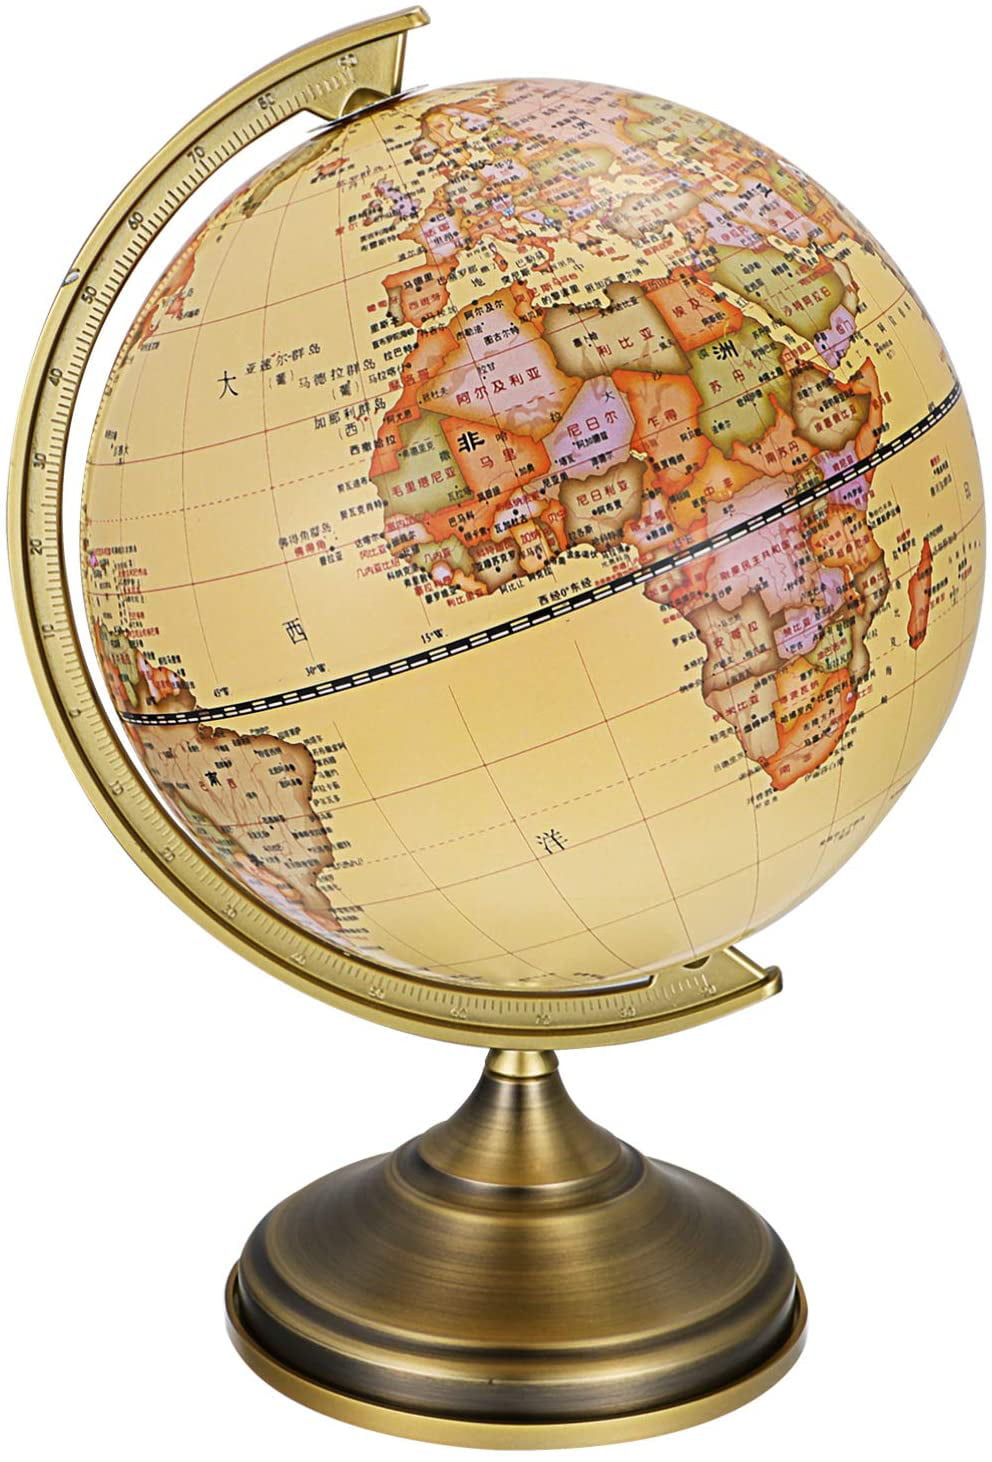 Vintage World Globe Antique Decorative Desktop Globe Rotating Earth Geography 